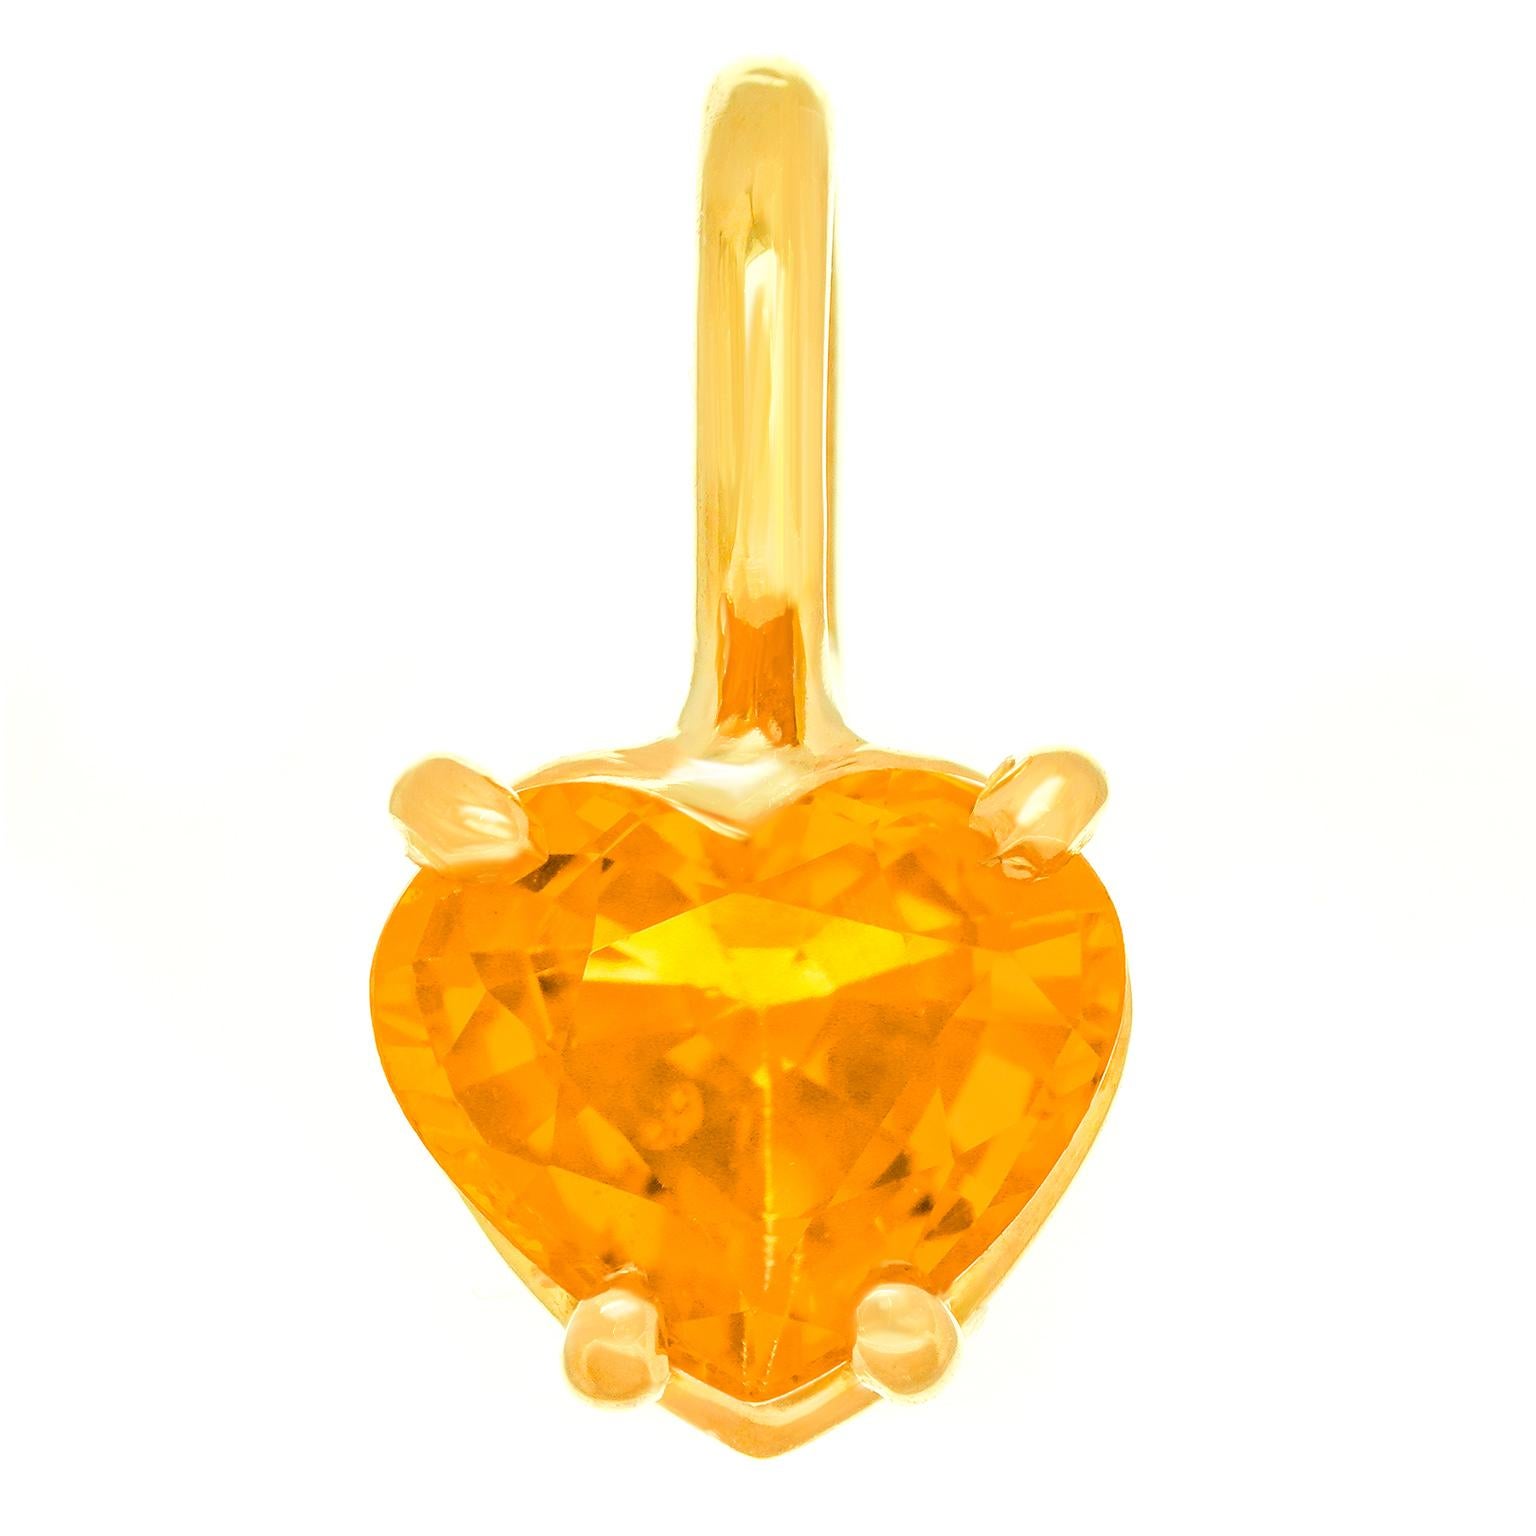 Heart Cut 1.09 carat Heart-shaped Orange Sapphire Pendant